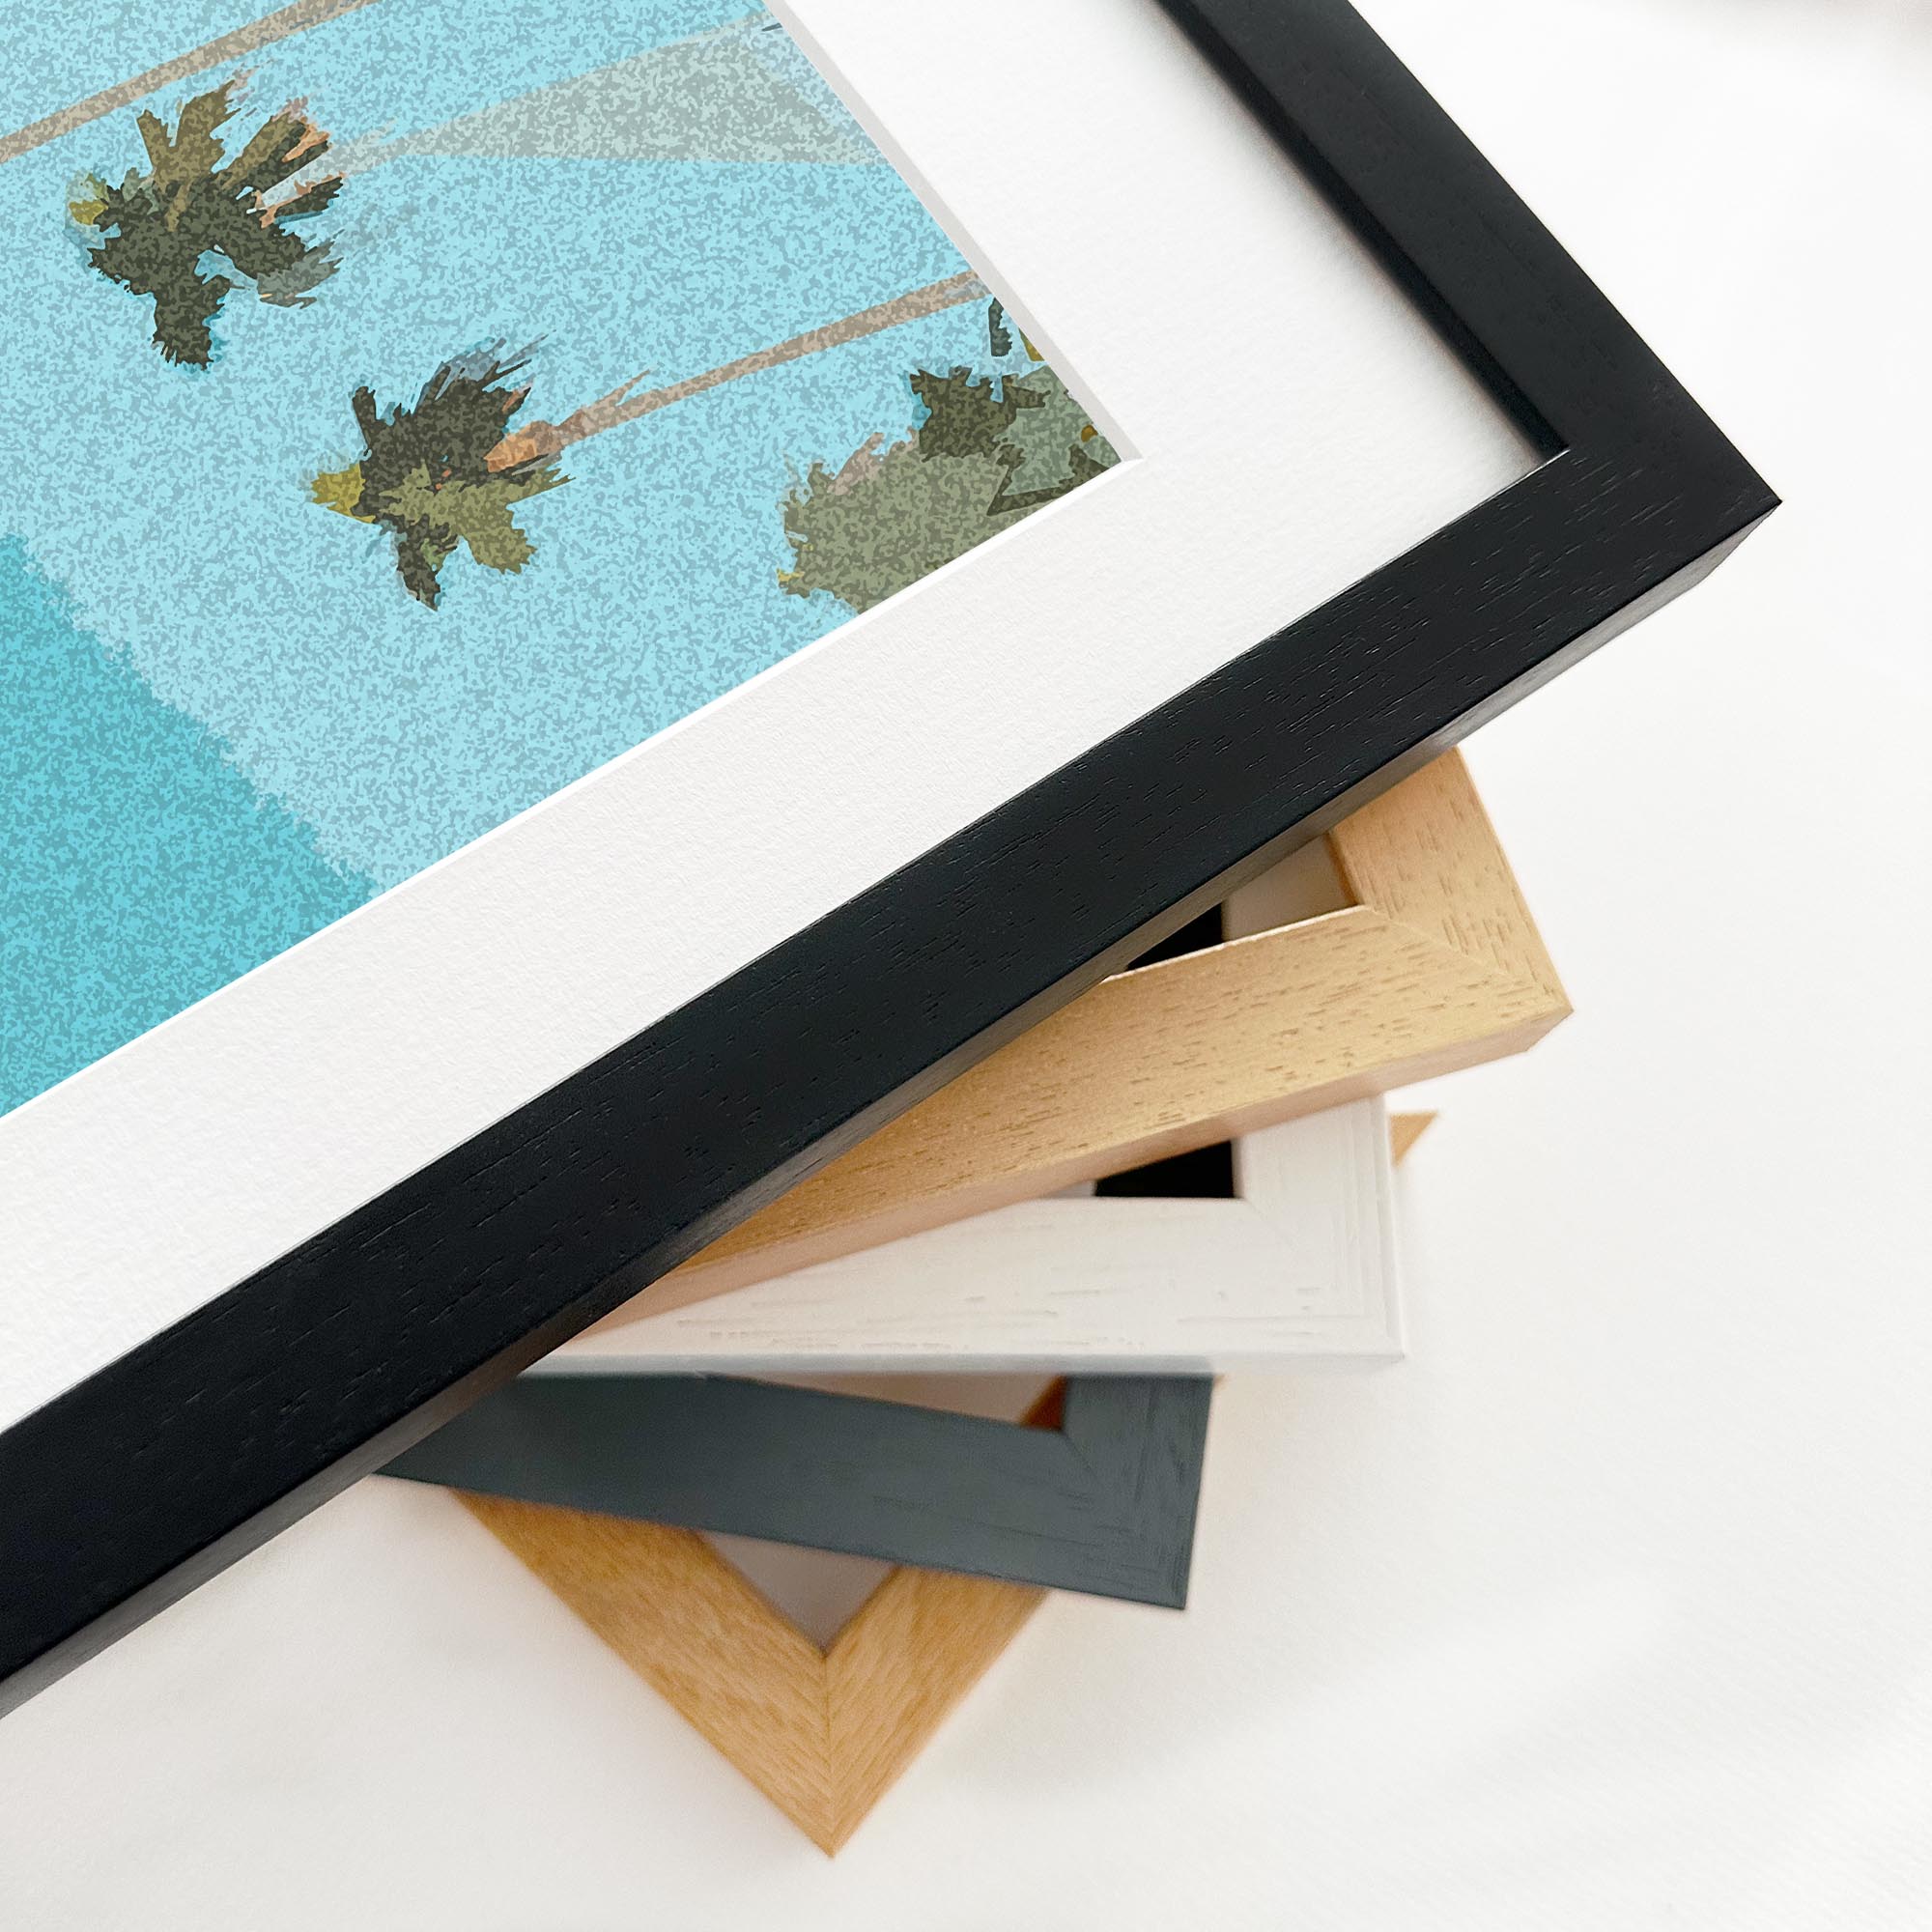 Blue Vintage Palm Trees Art Print